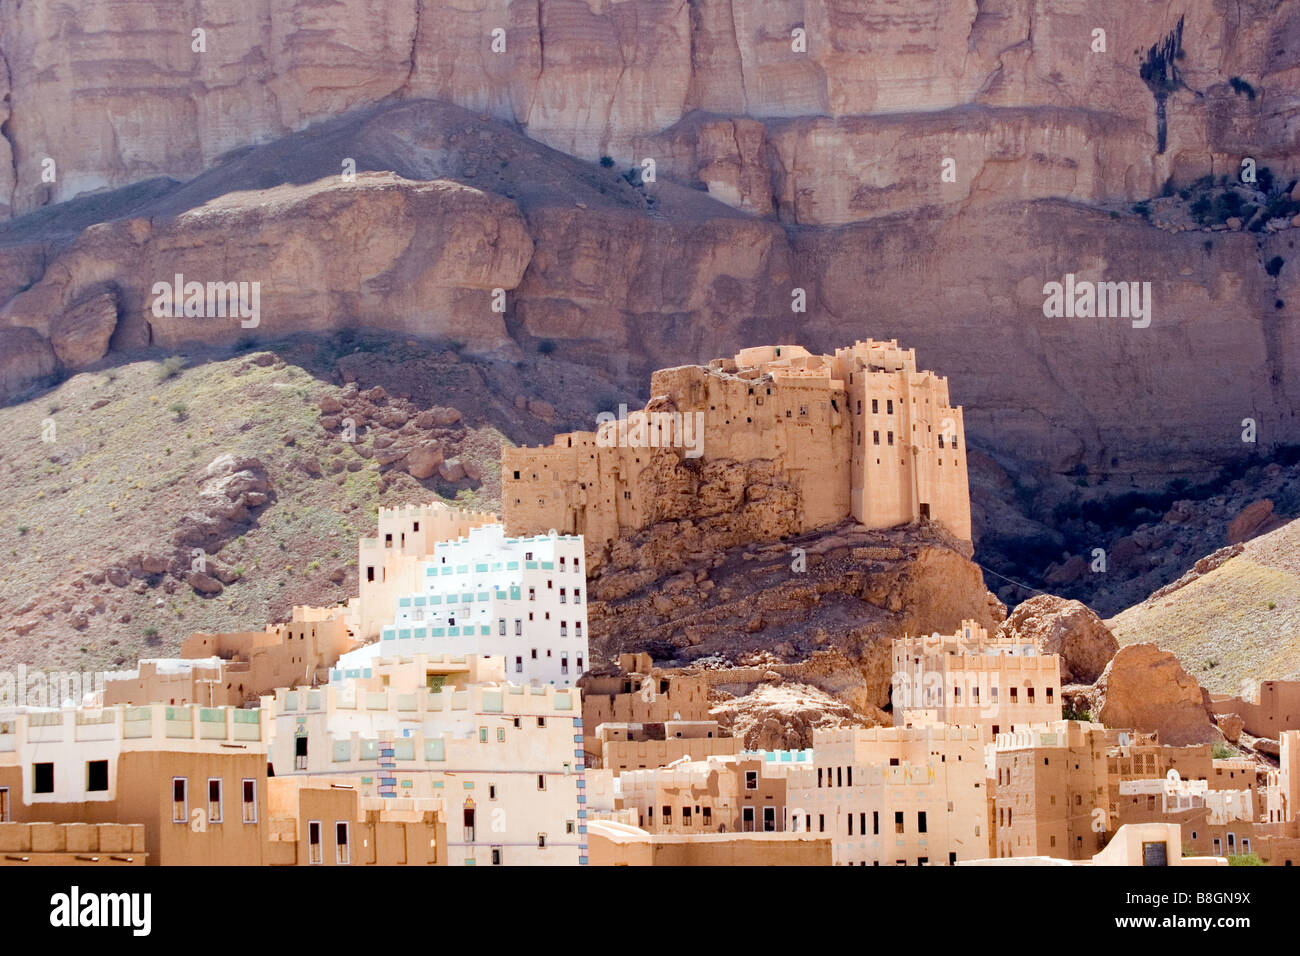 village in wadi do'an yemen Stock Photo